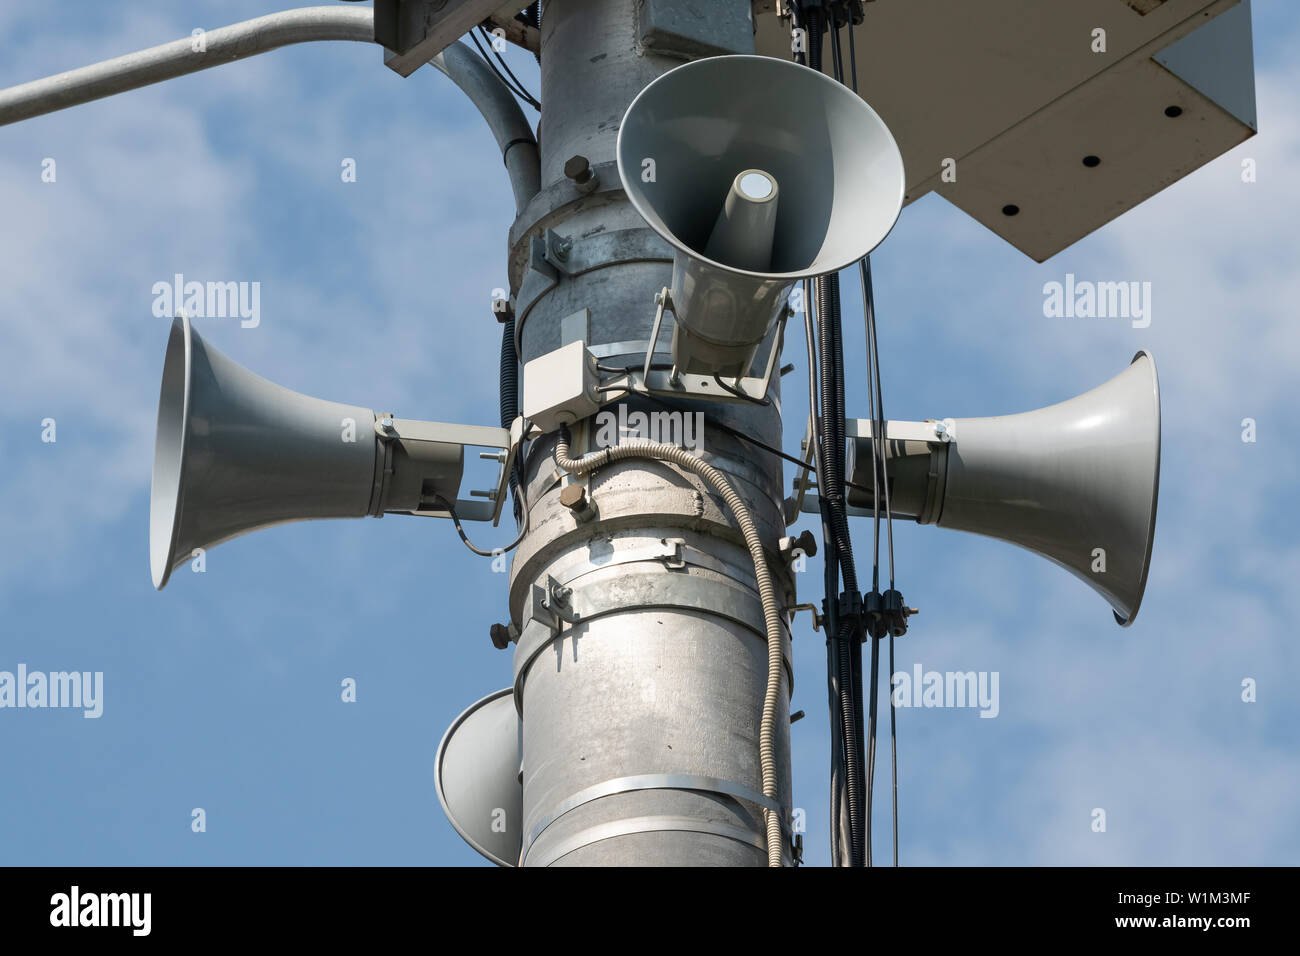 description: Three loudspeakers on pole against blue sky Stock Photo